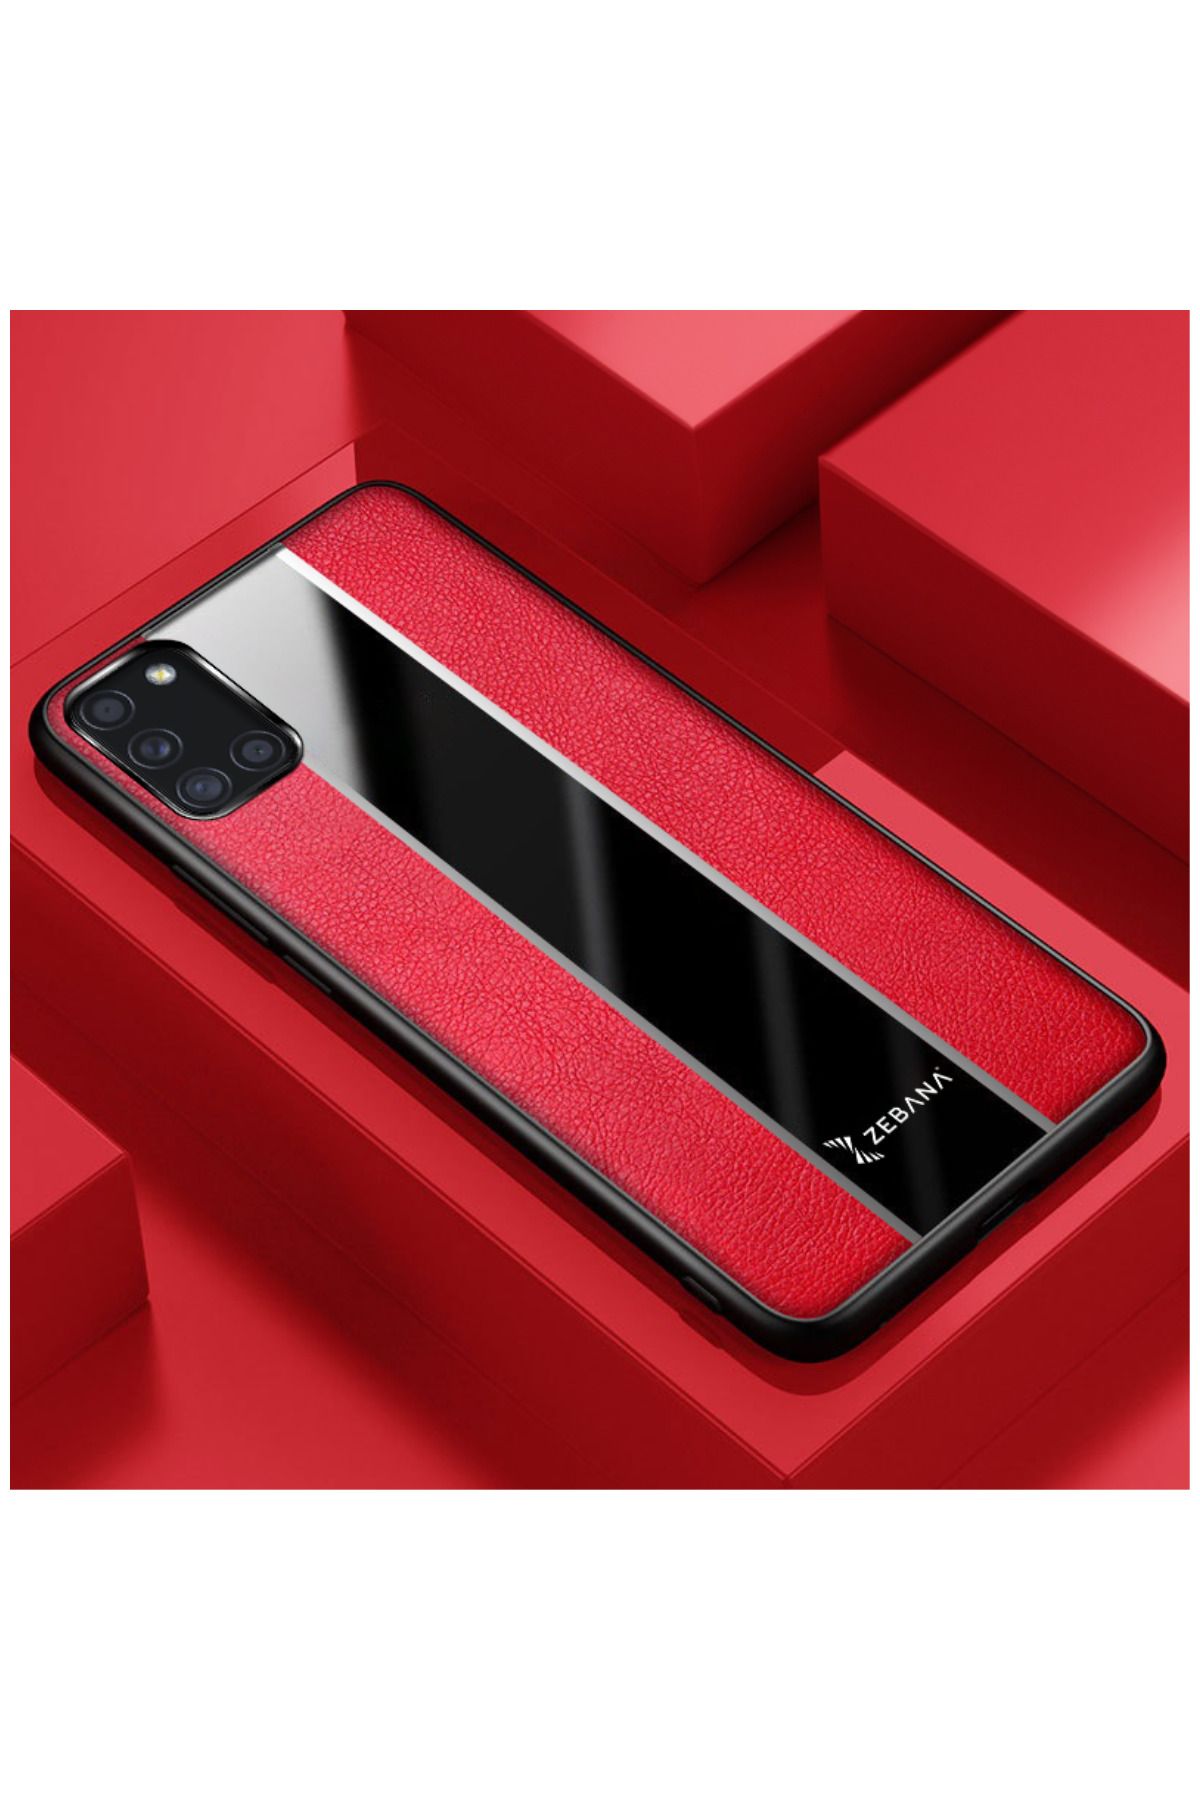 Zebana Samsung Galaxy A31 Uyumlu Kılıf Zebana Premium Deri Kılıf Kırmızı